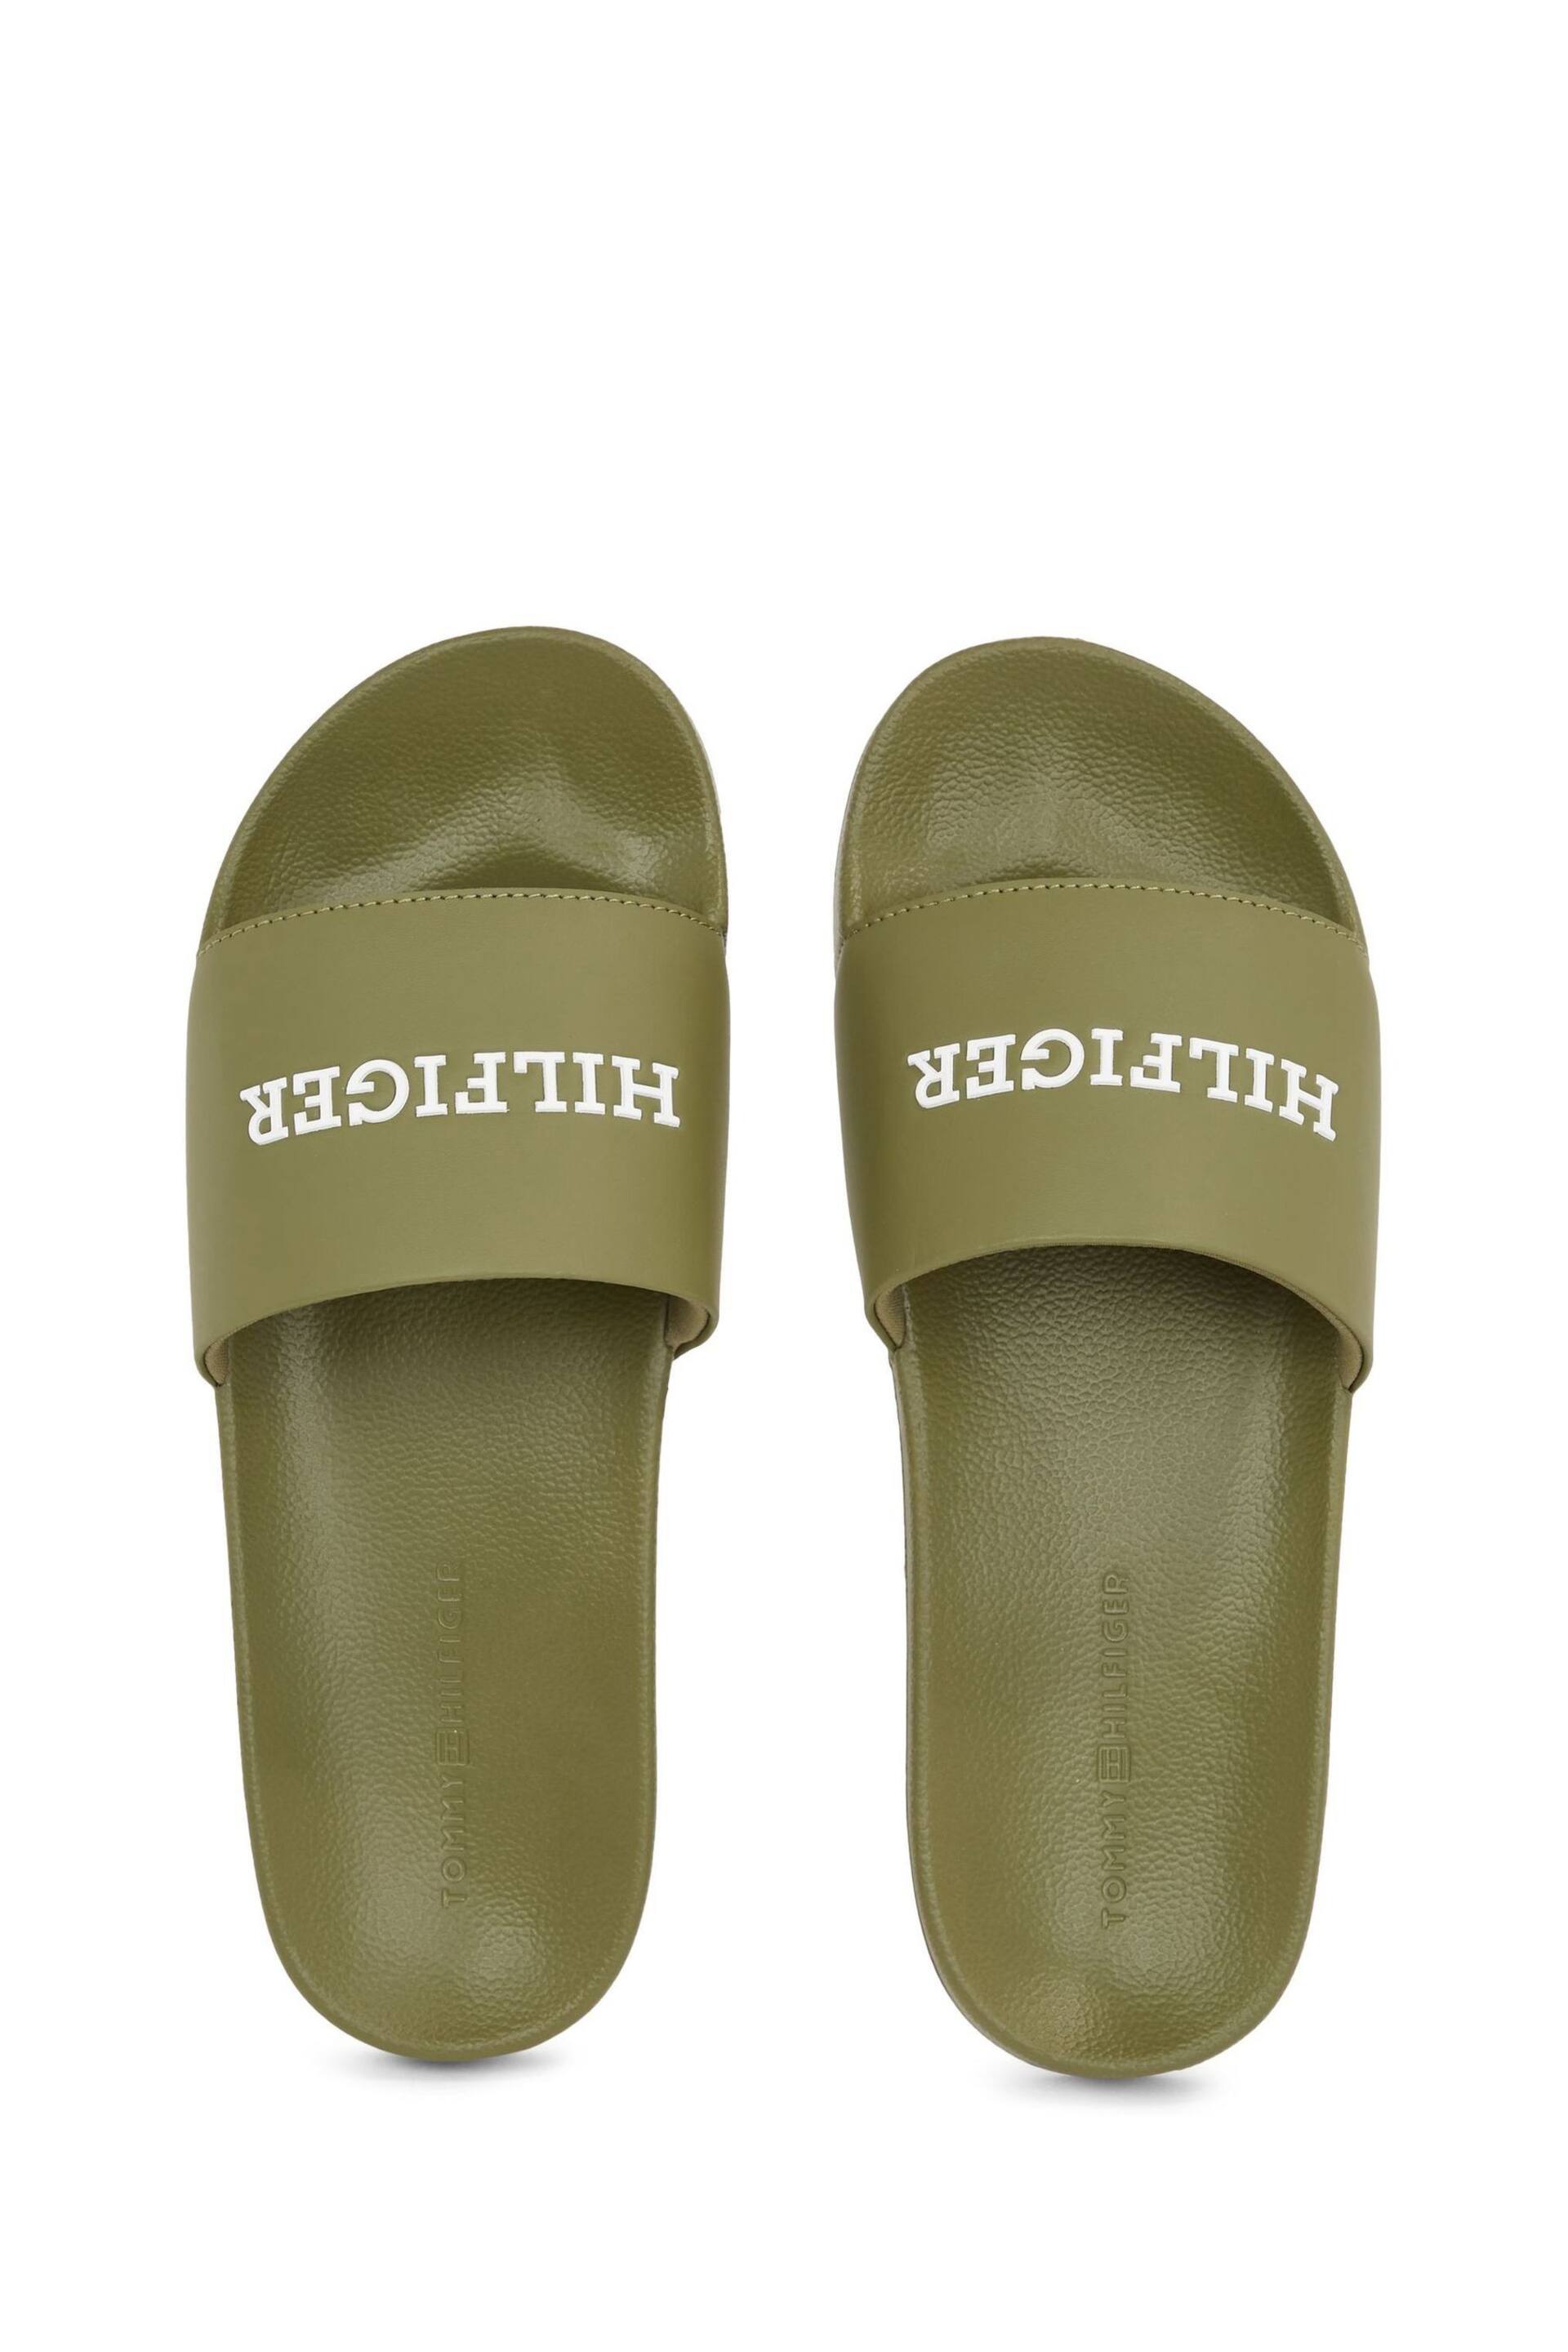 Tommy Hilfiger Hilfiger Leather Beach Sandals - Image 4 of 4